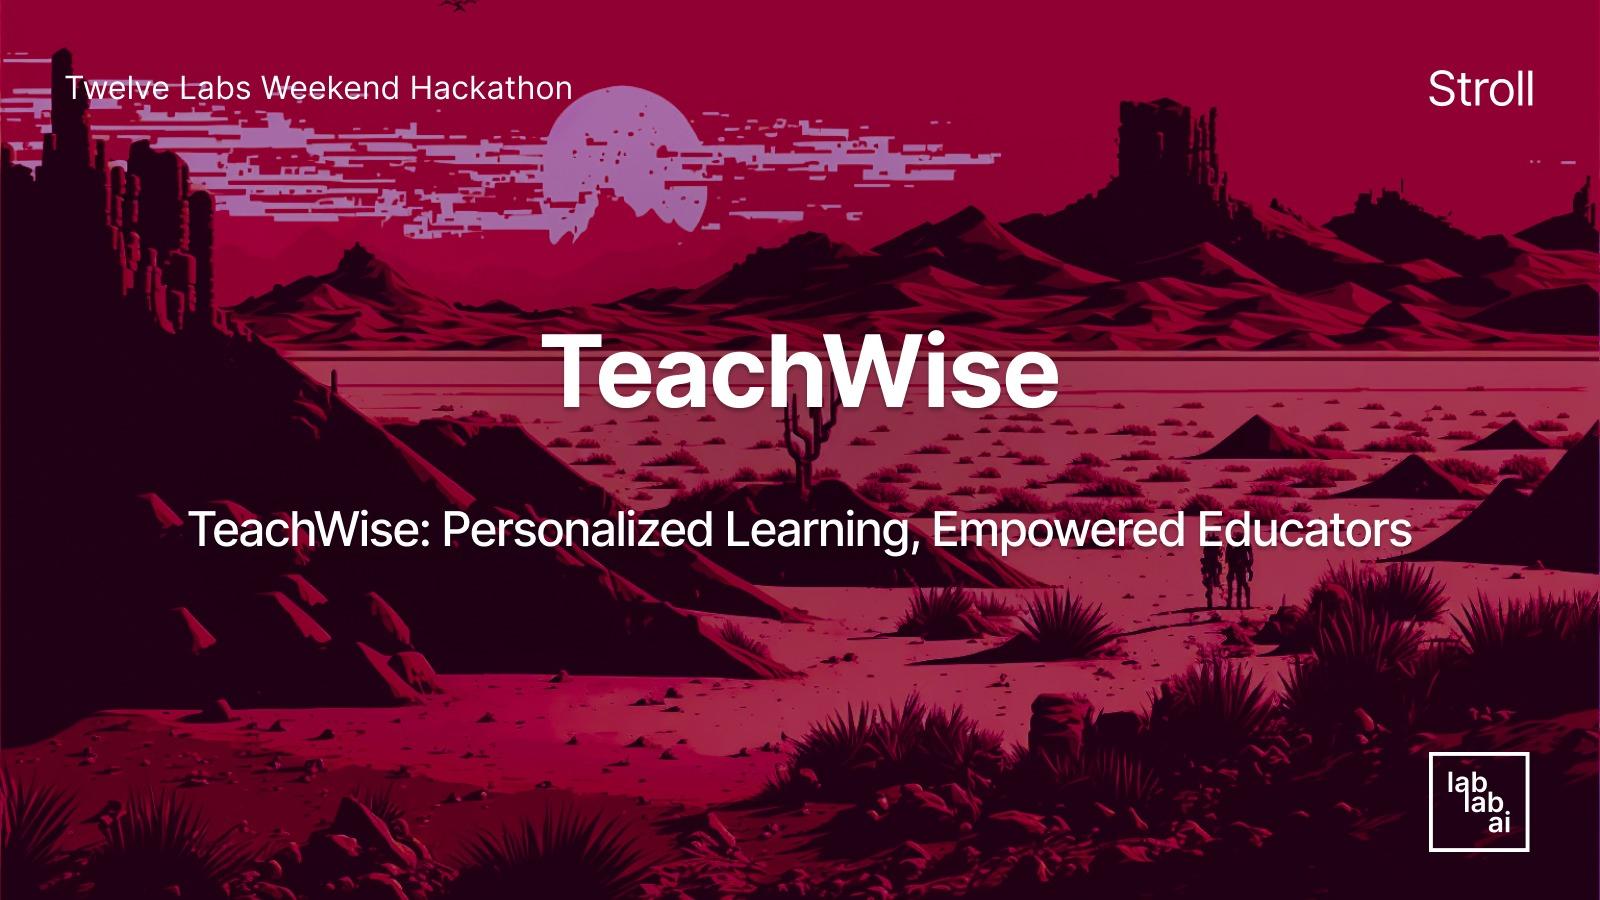 TeachWise